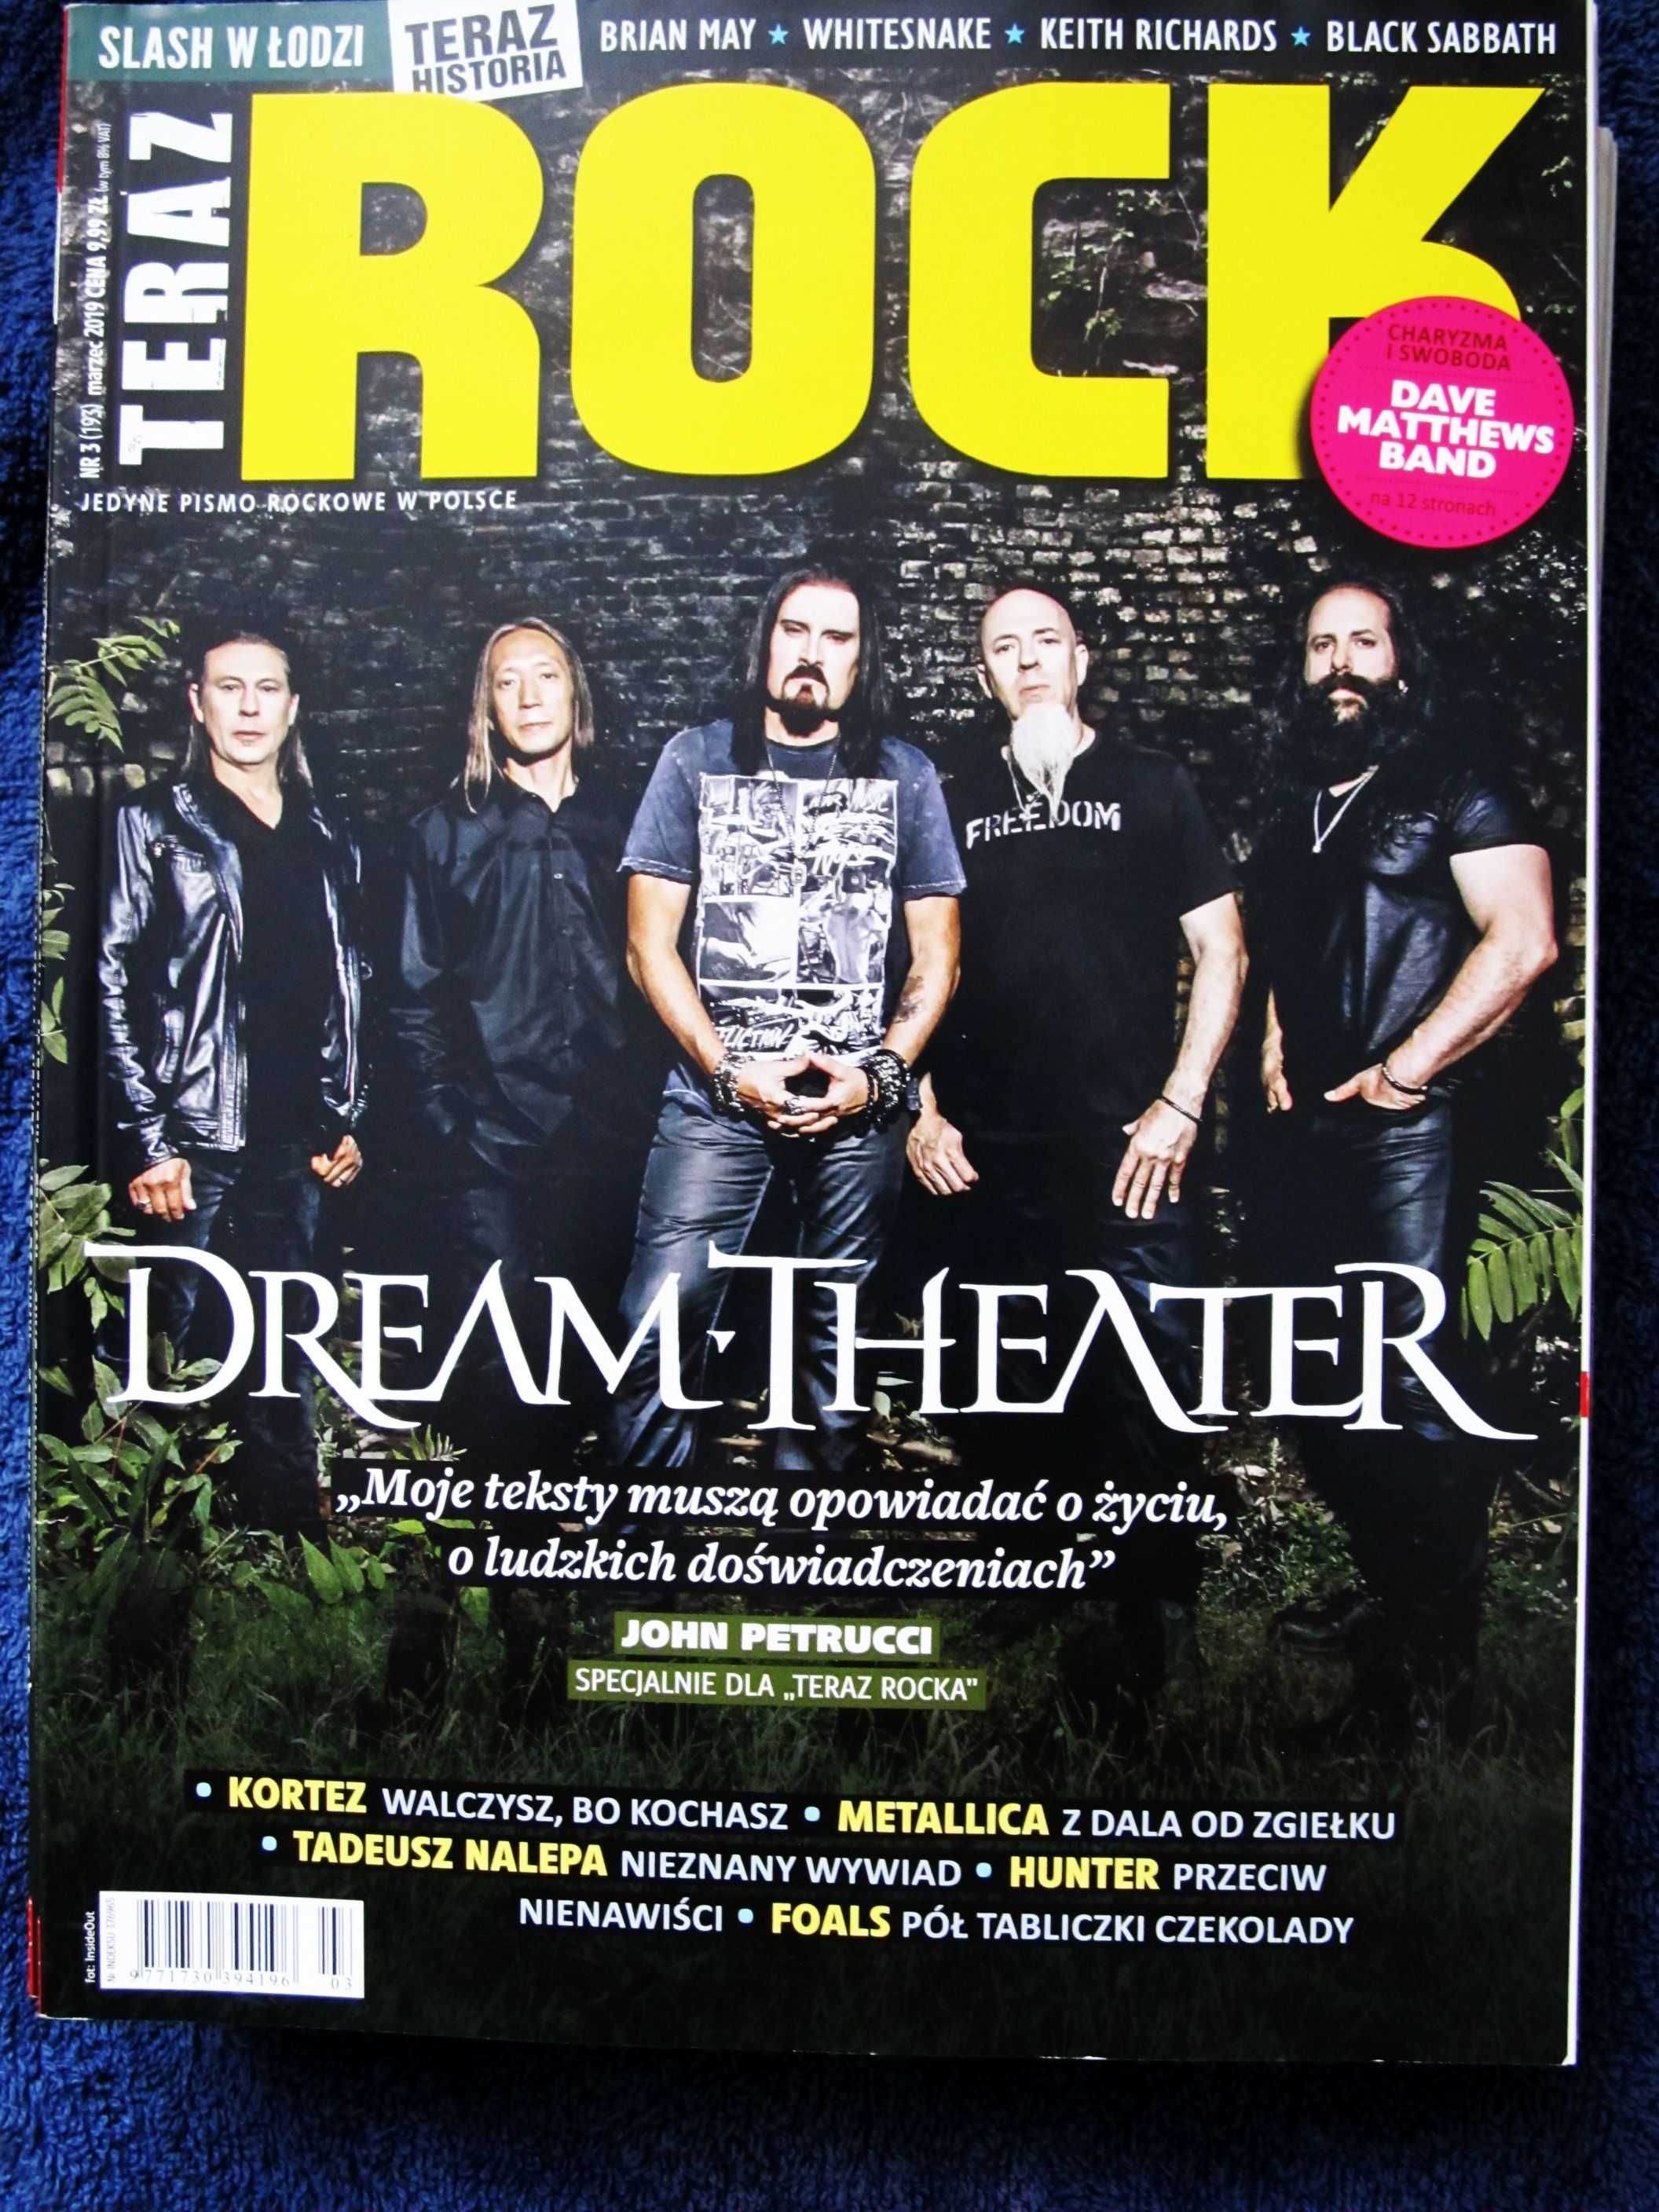 Teraz Rock 3/2019 Dream Theater,Dave Matthews Band,Slash,Kortez,Nalepa